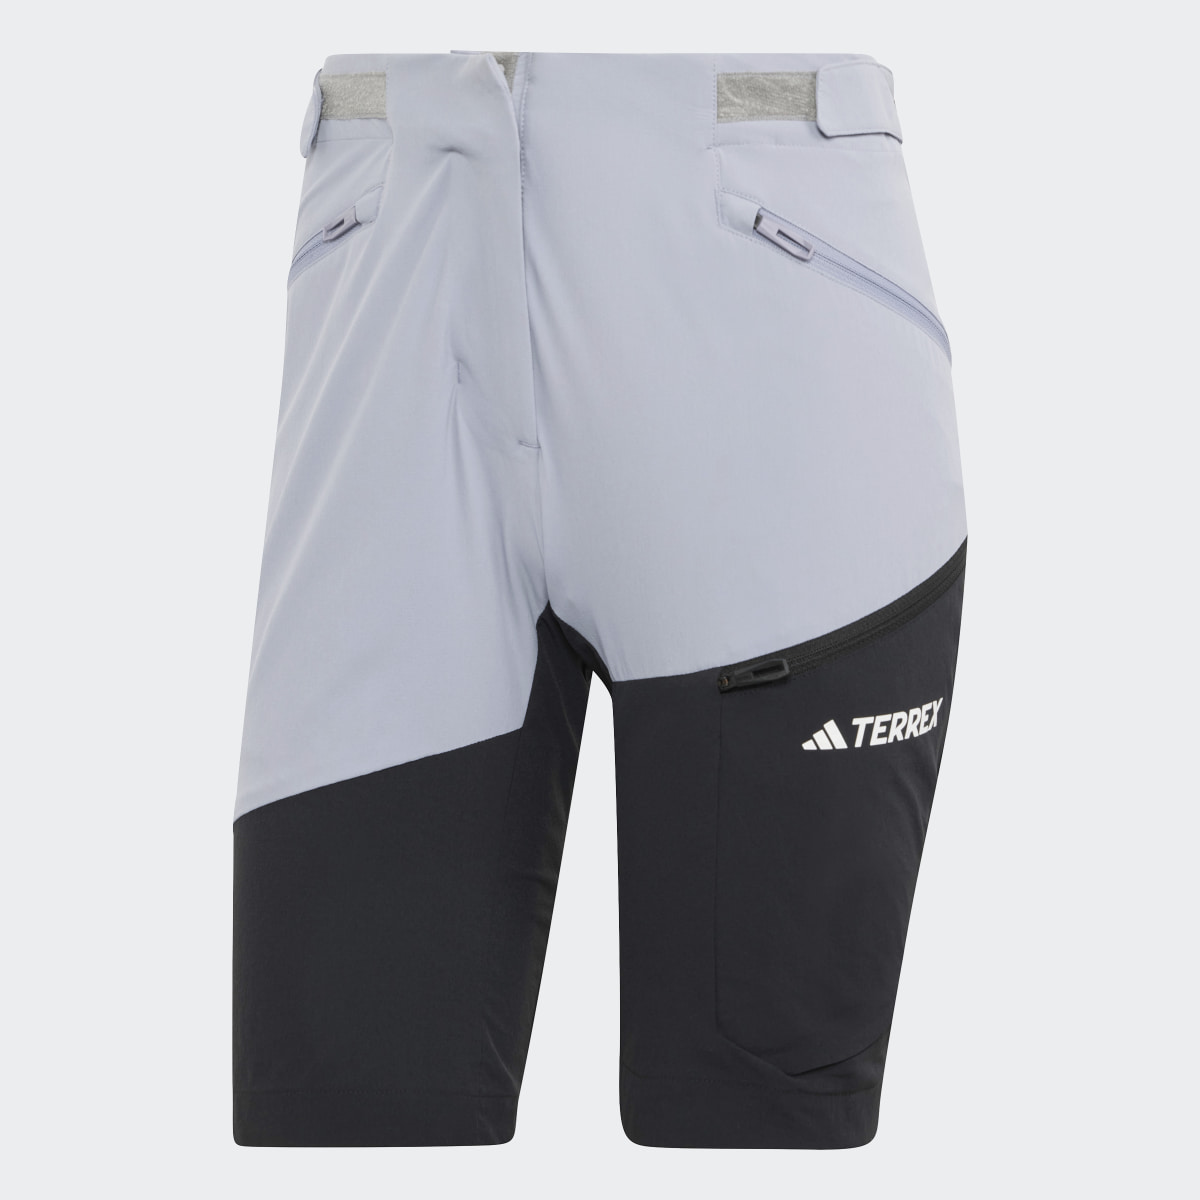 Adidas TERREX Xperior Hiking Shorts. 10